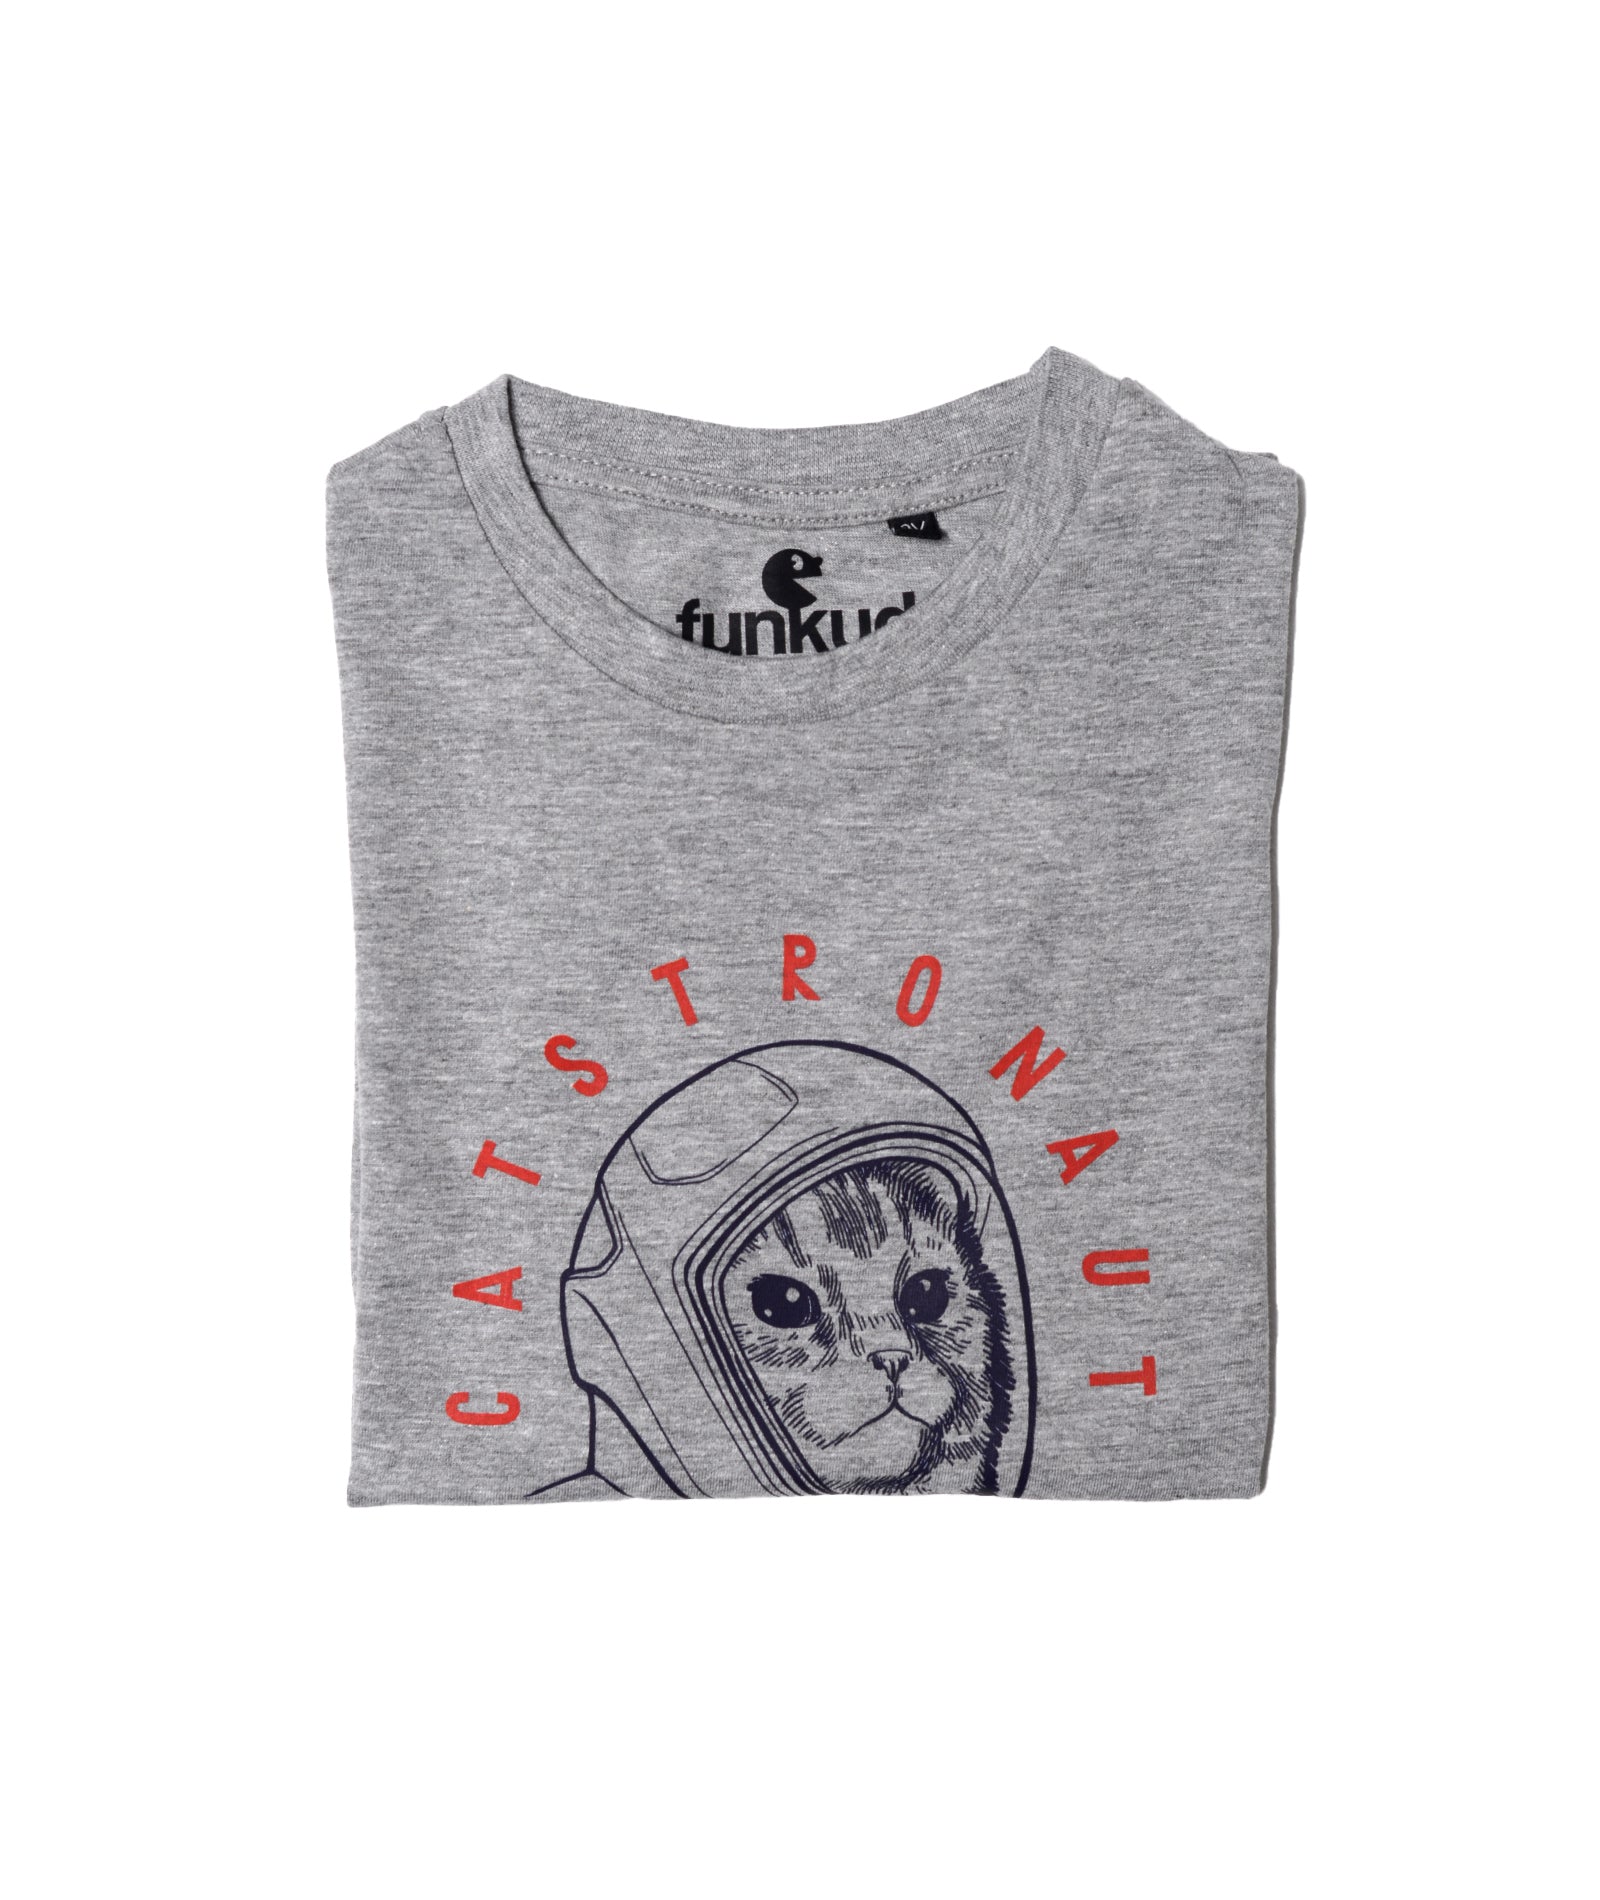 Space Cat Kids T-Shirt